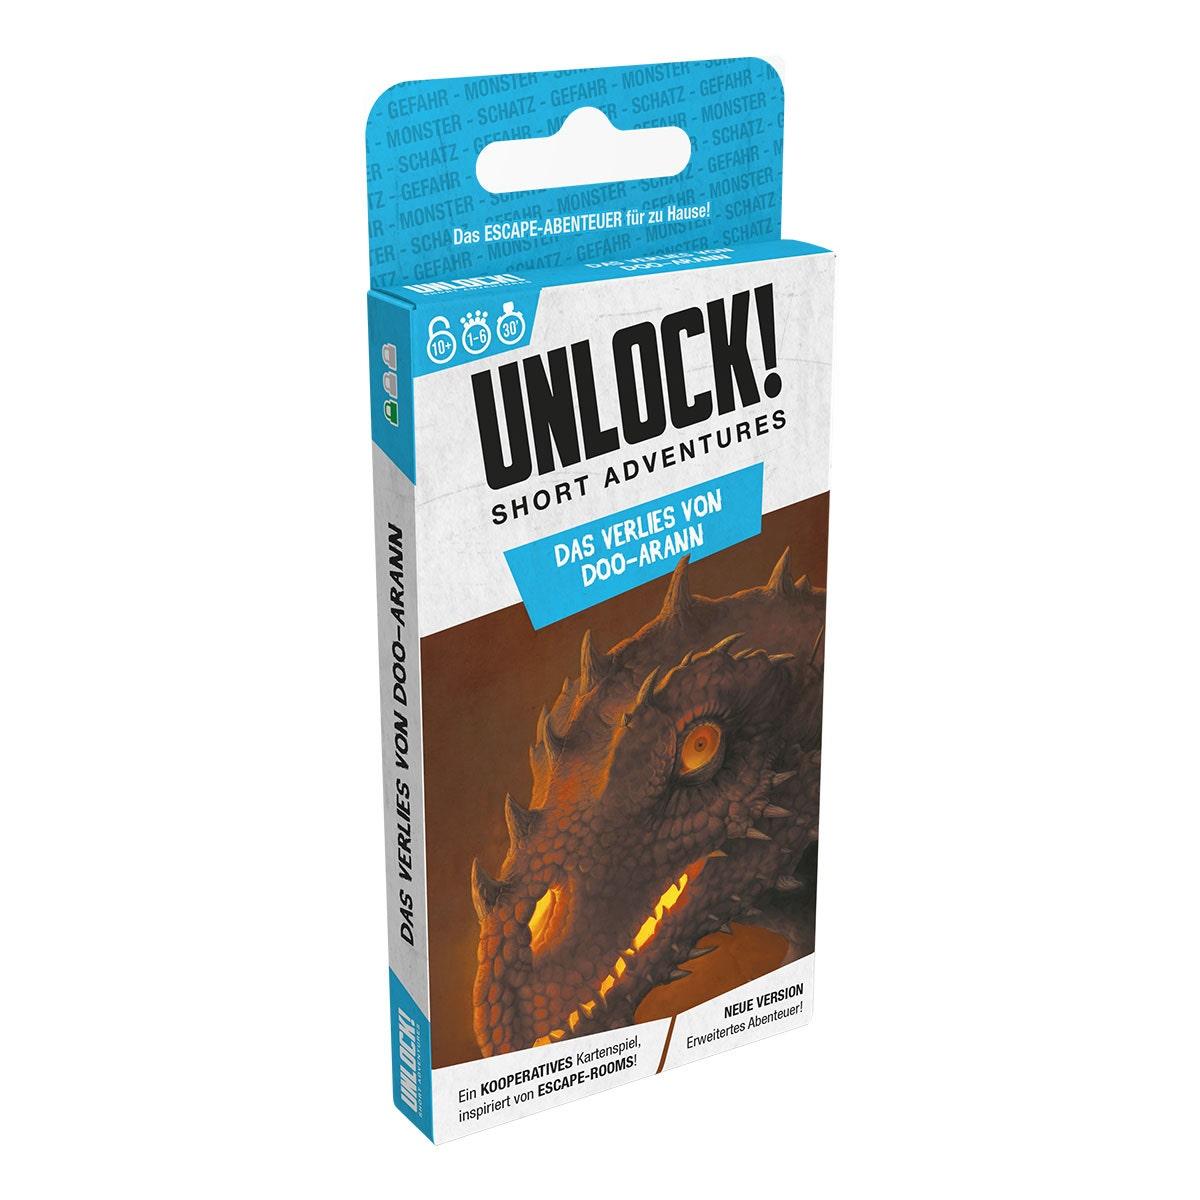 Unlock! Short Adventures - Das Verlies des Doo-Arann